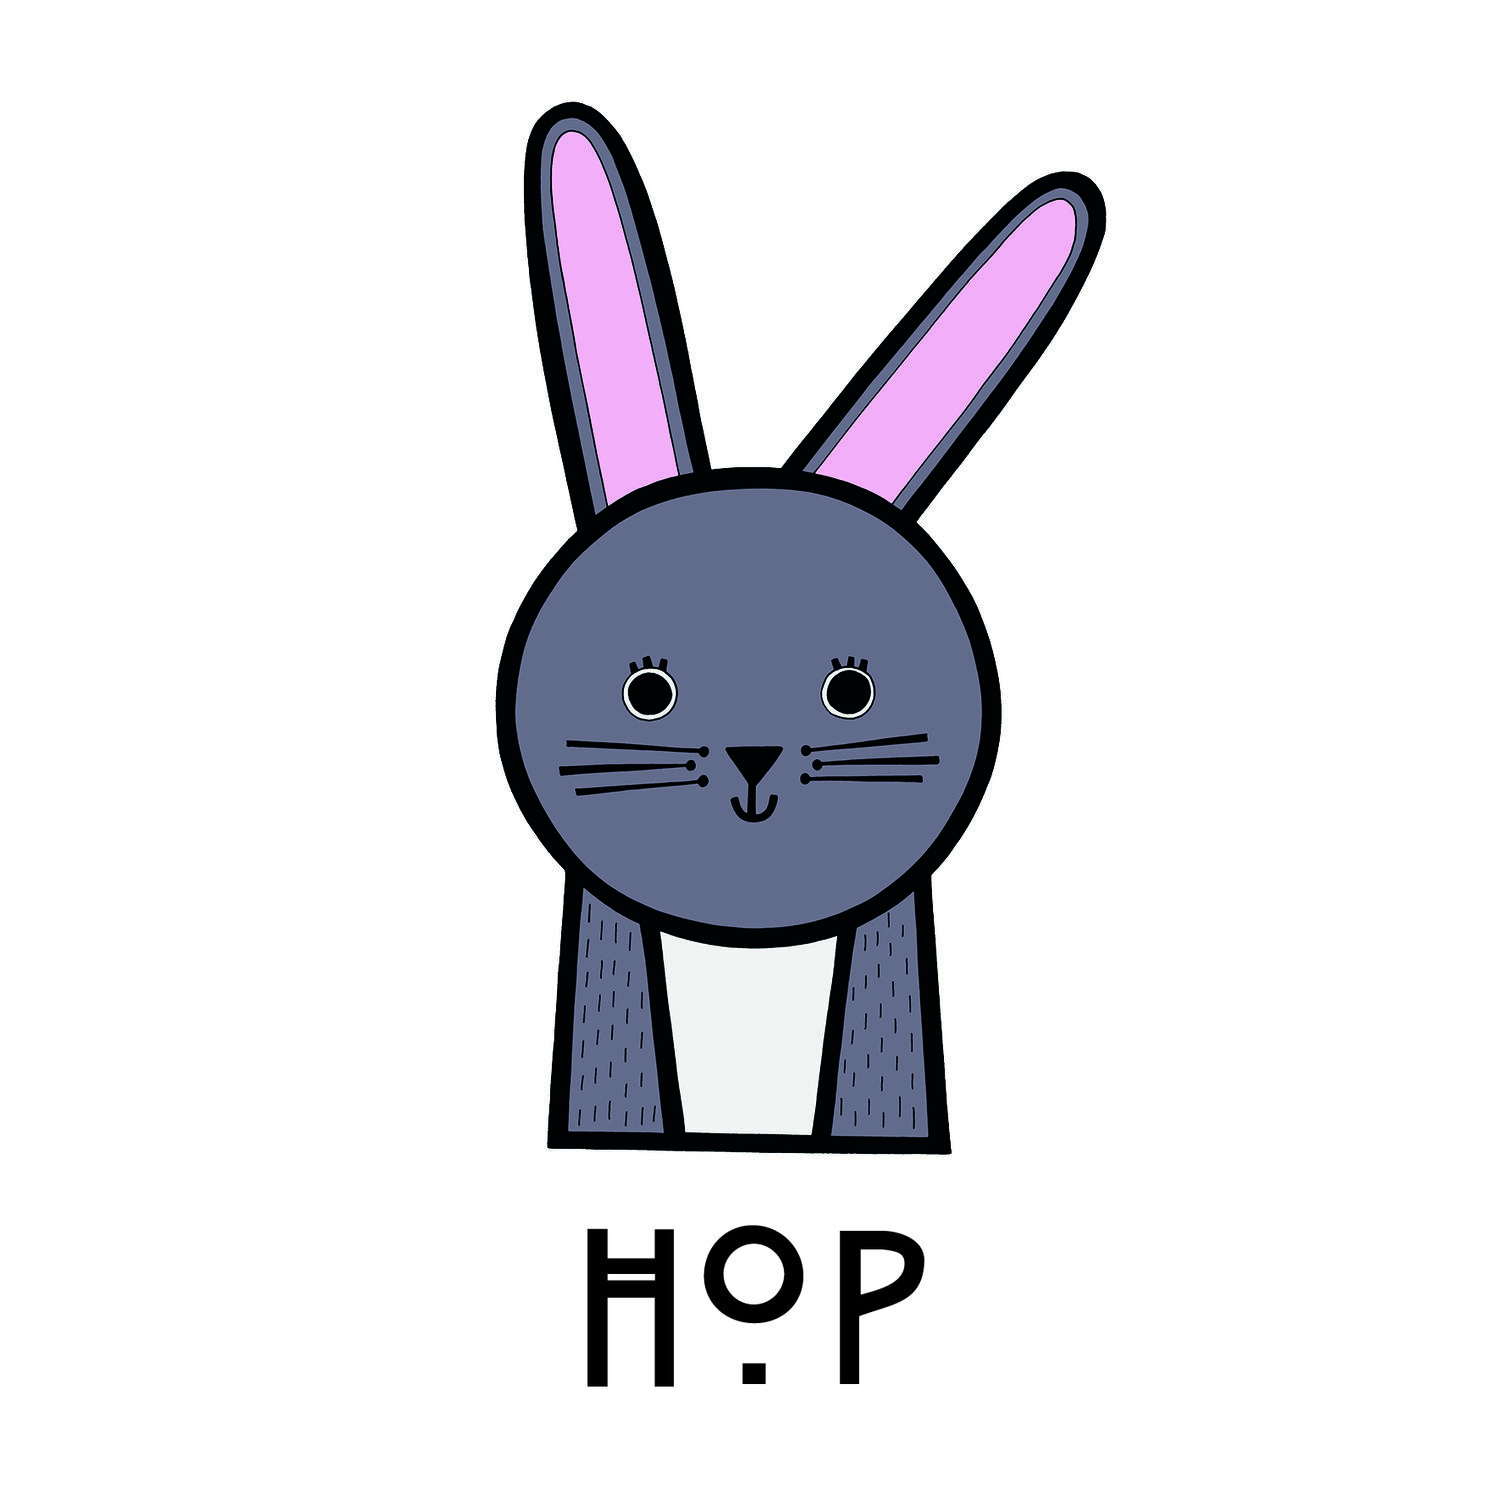 Hop copy.jpg